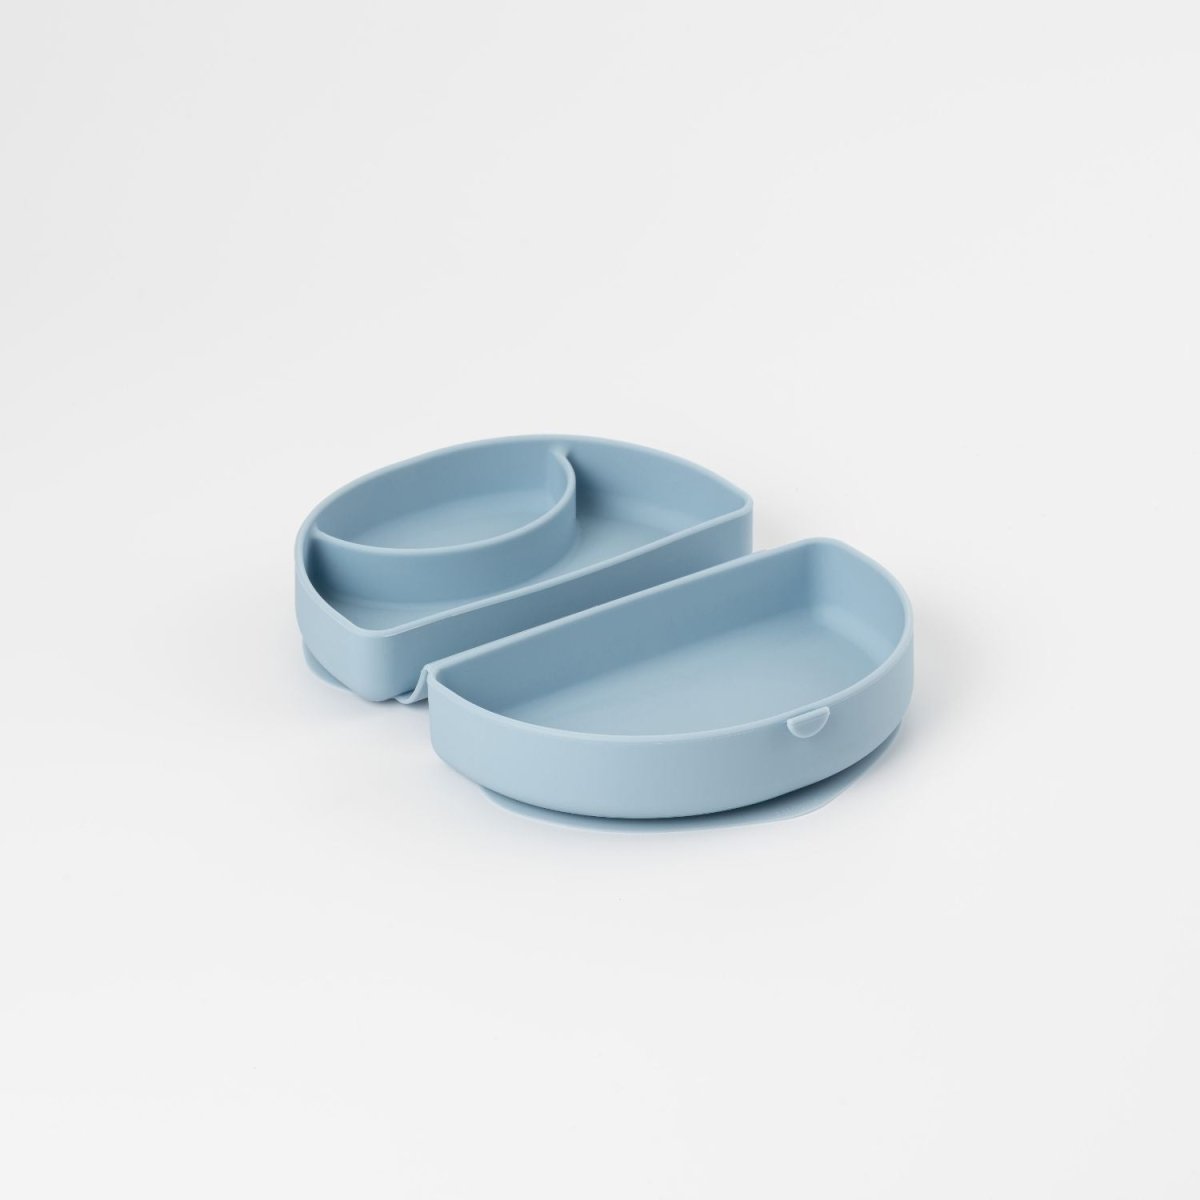 Miniware Silifold Portable Suction Base Plate Chicory Blue - SLFSCK